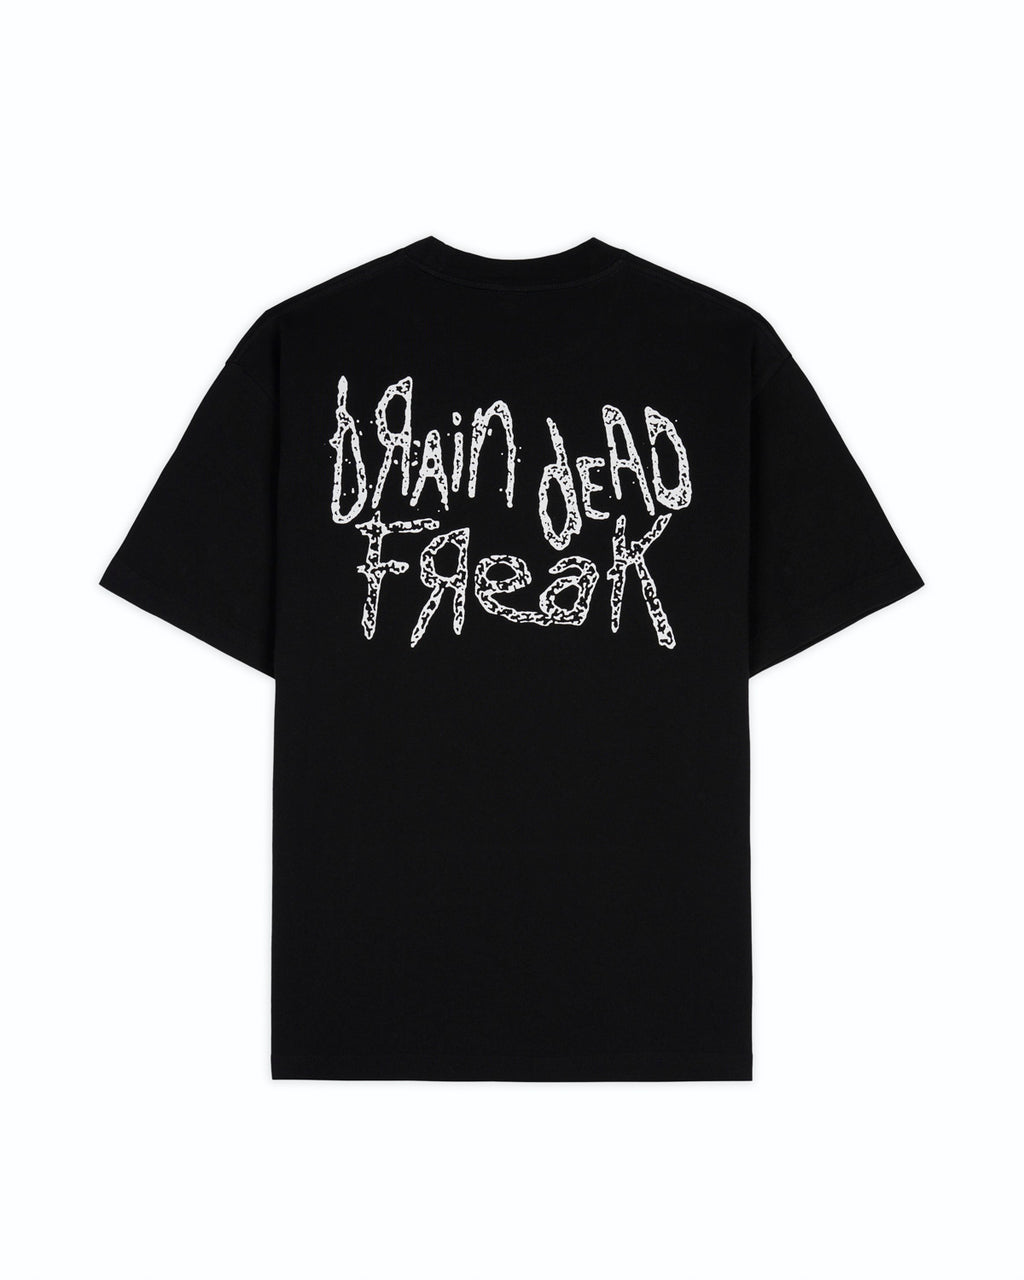 Brain Dead x Korn Freak T-shirt - Black